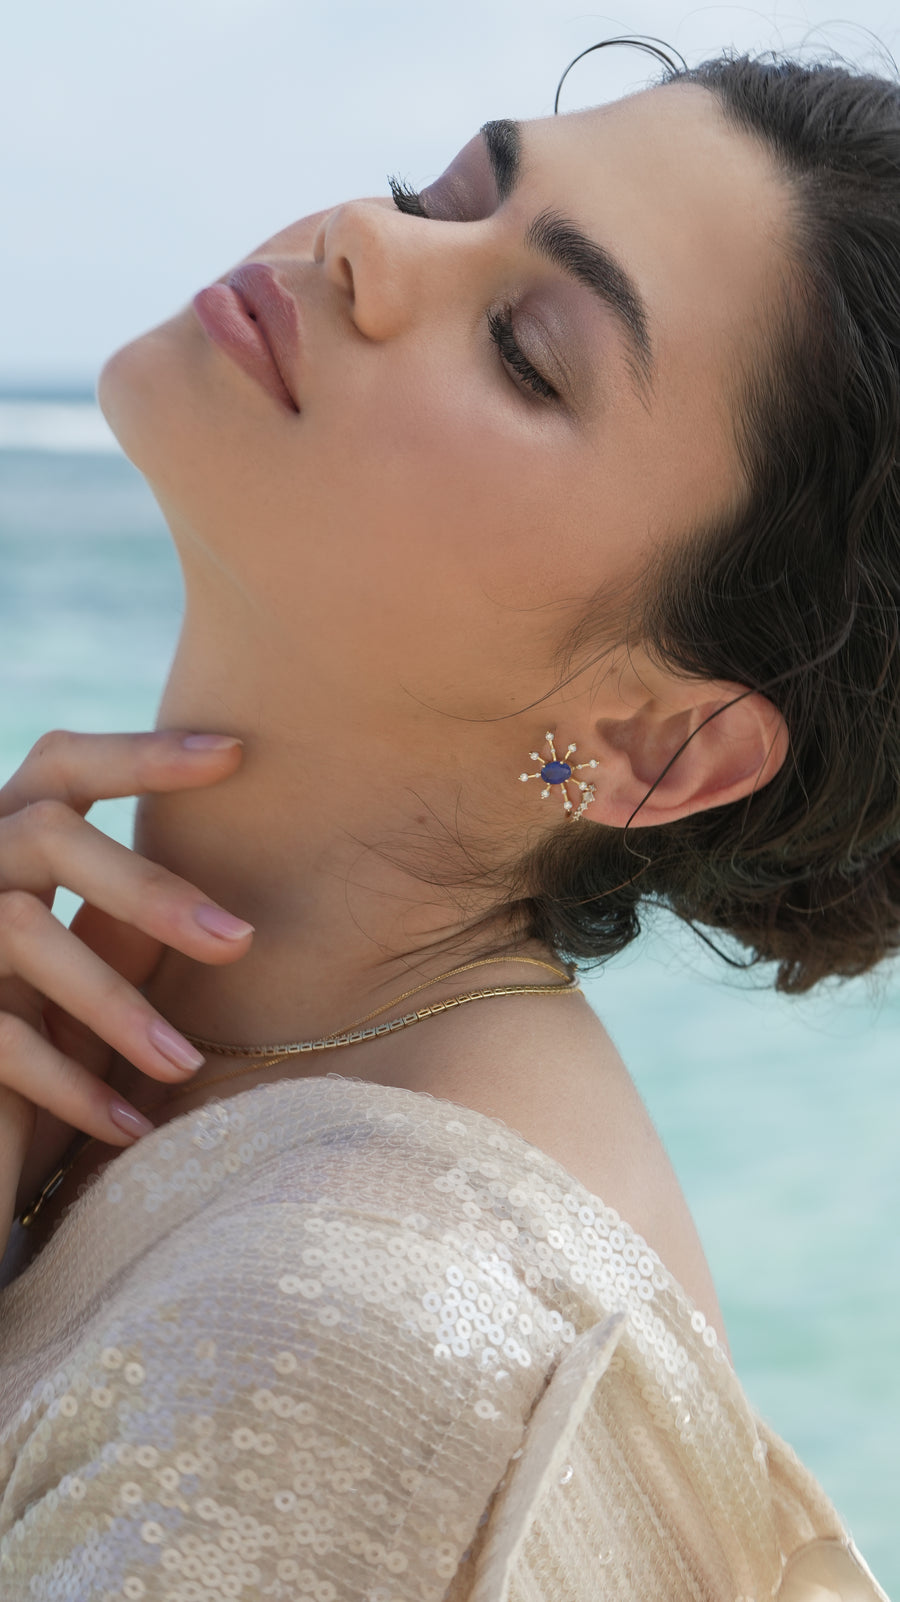 Ceylon Sapphire and Diamond Starburst Earrings